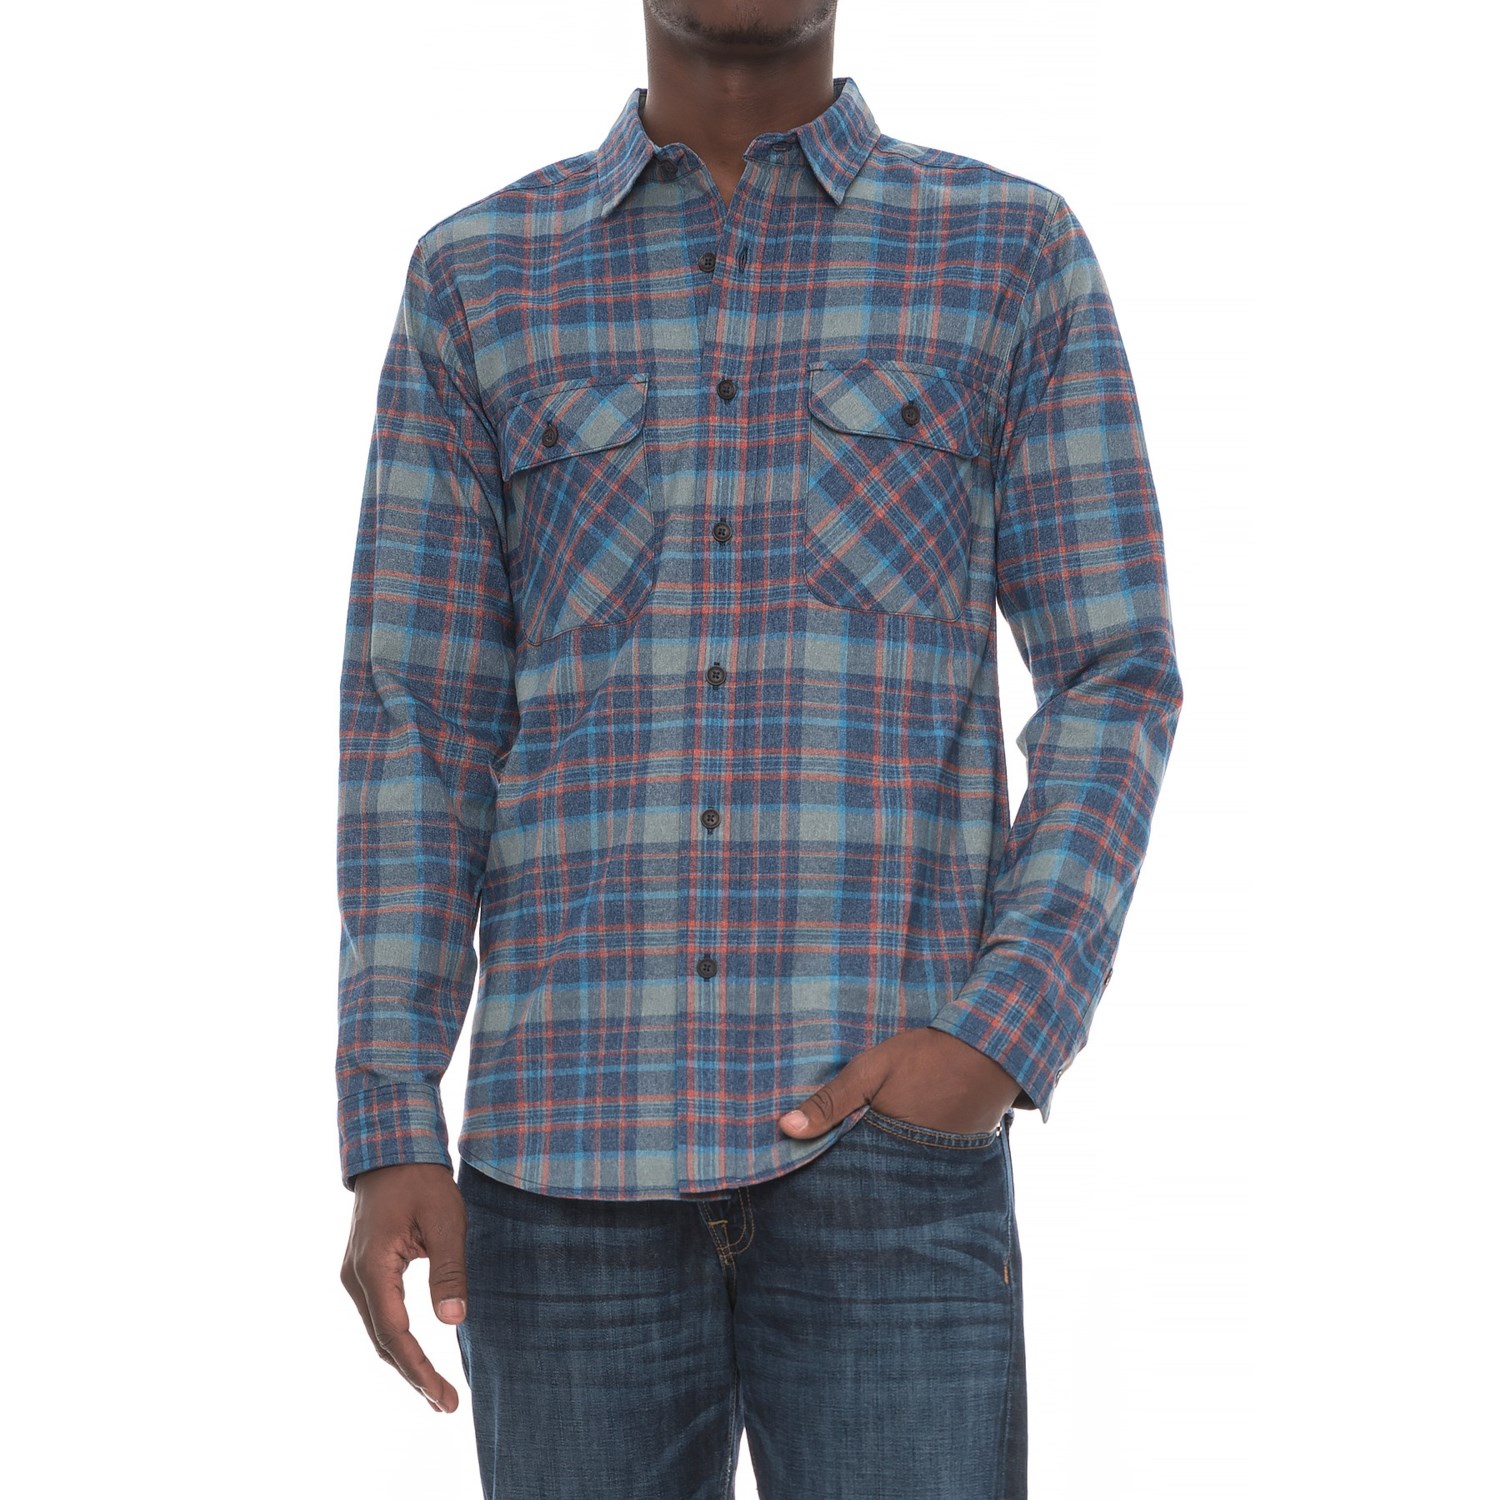 Royal Robbins High-Performance Plaid Flannel Shirt (For Men) - Save 60%